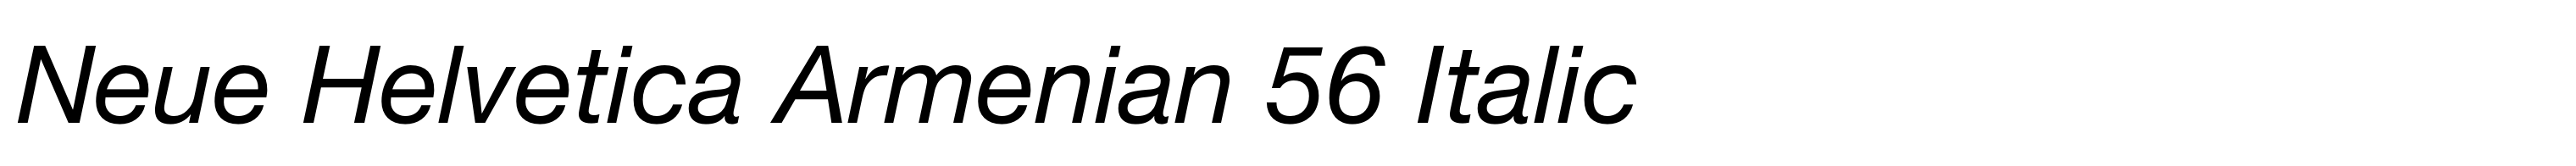 Neue Helvetica Armenian 56 Italic